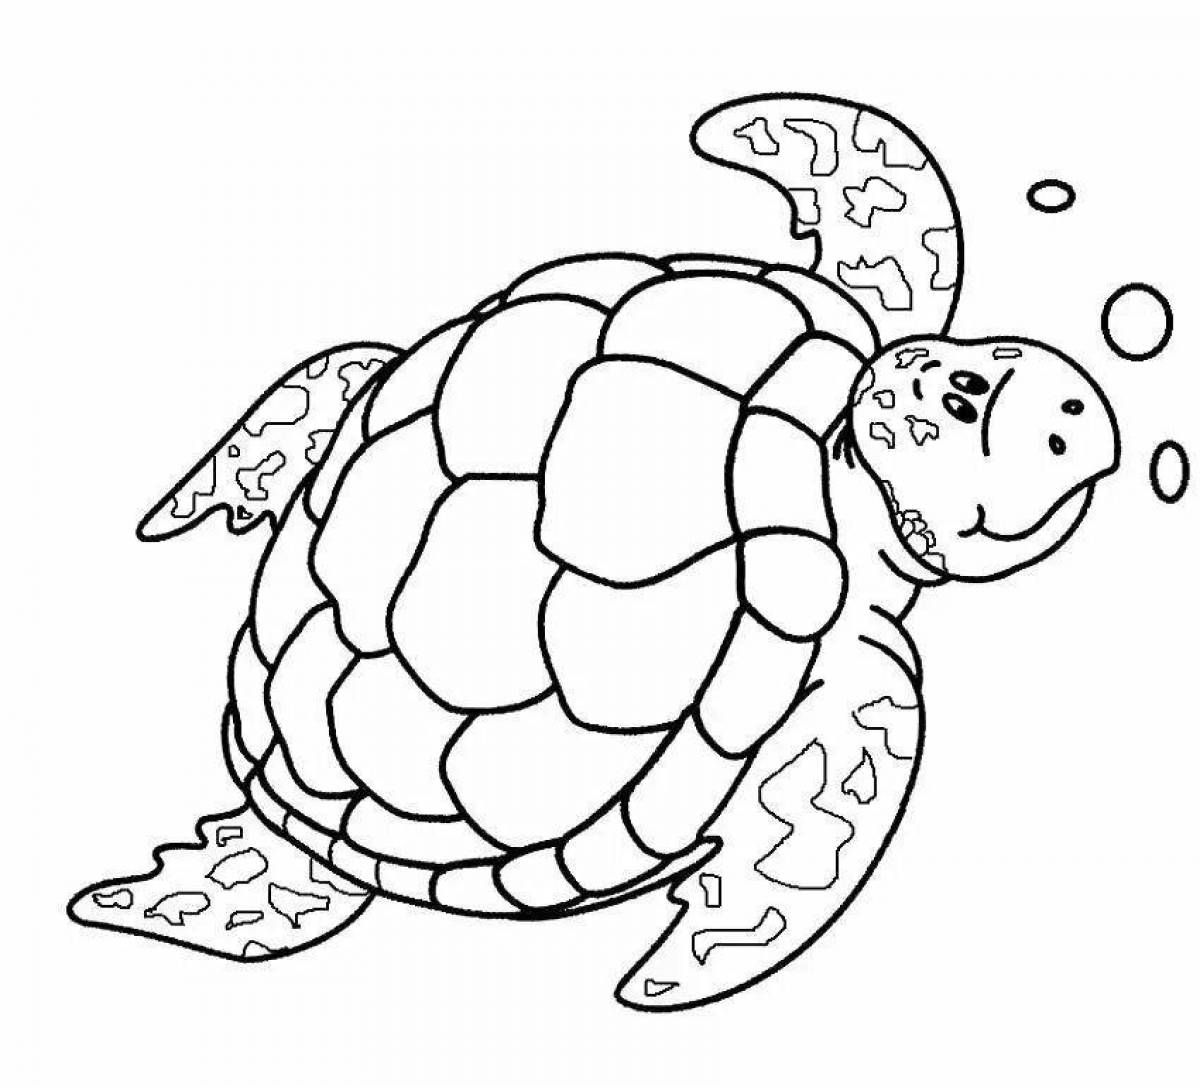 Раскраска веселая морская черепаха